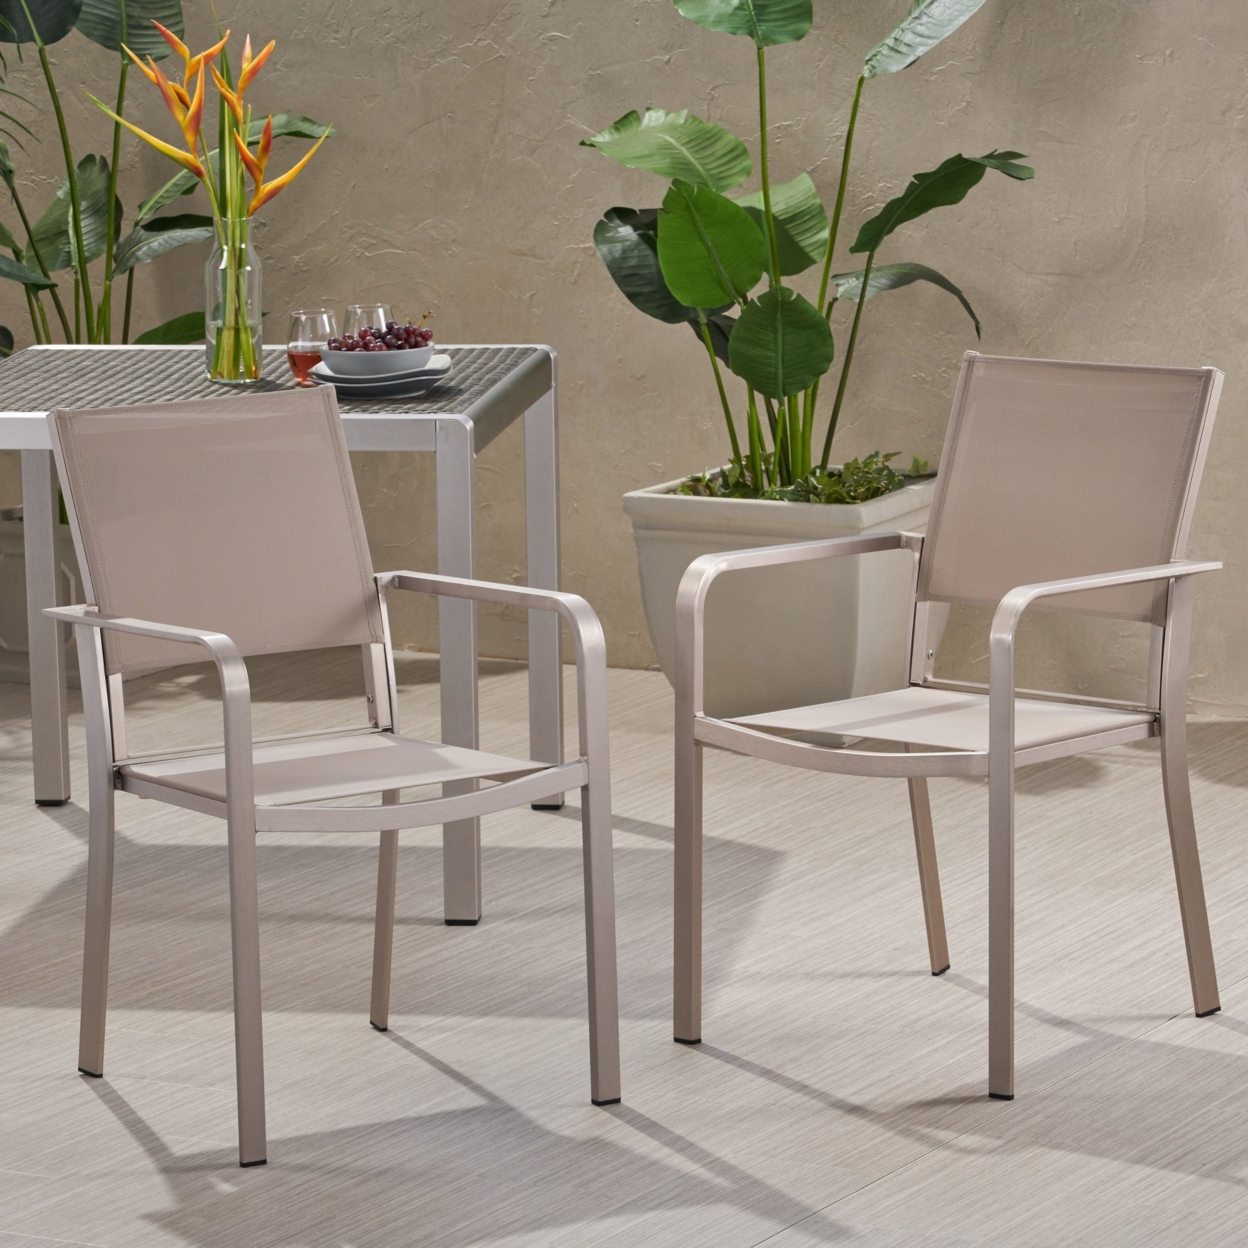 Martin Outdoor Modern Aluminum Dining Chair With Mesh Seat (Set Of 2) - Gun Metal Gray / Dark Gray